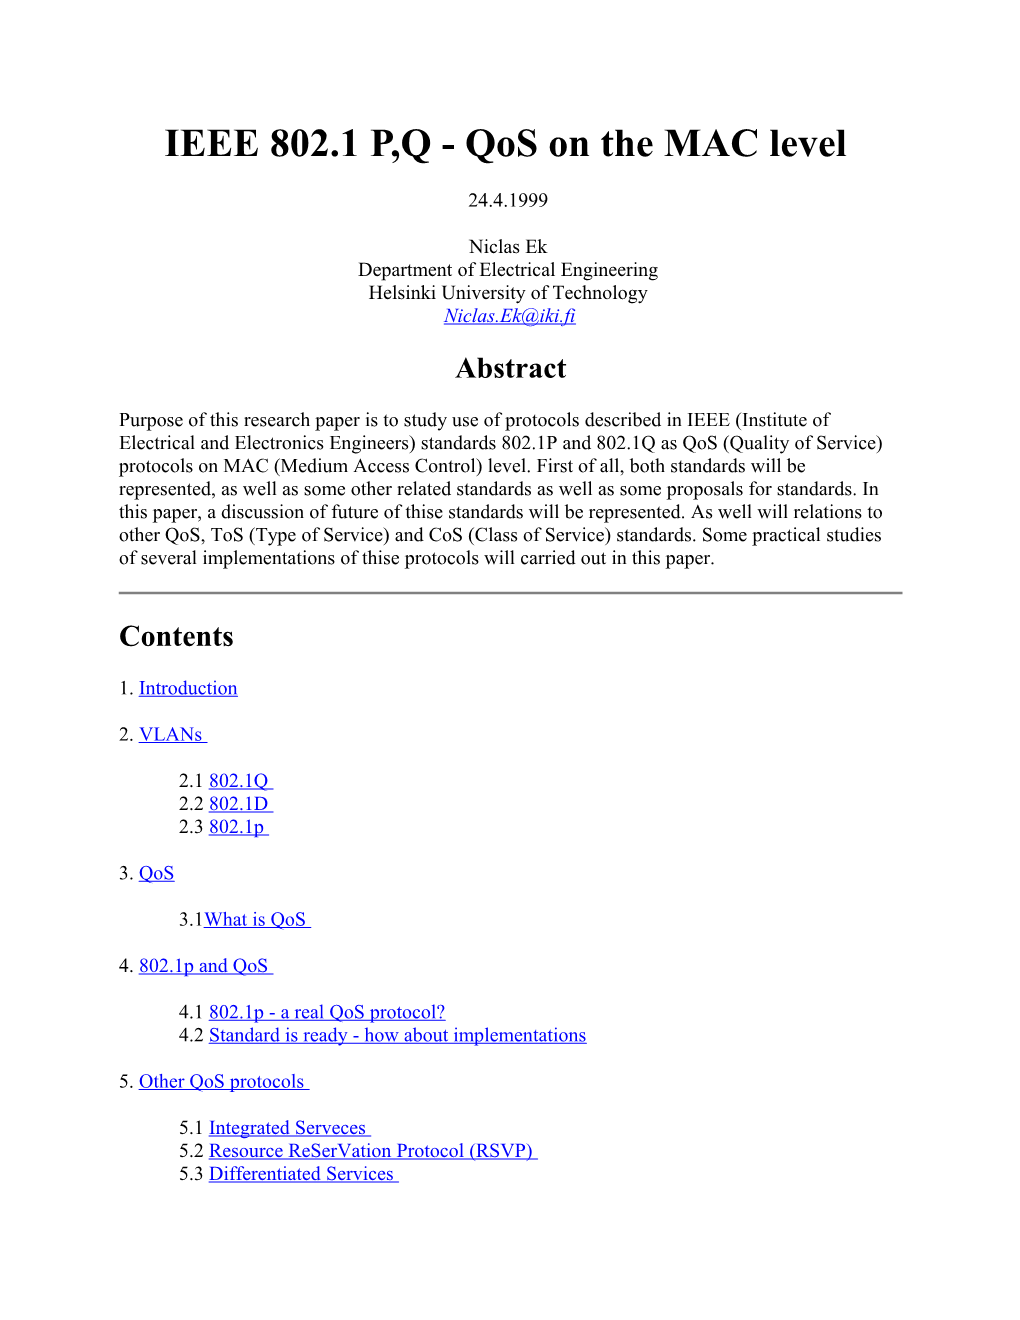 IEEE 802.1 P,Q - Qos on the MAC Level